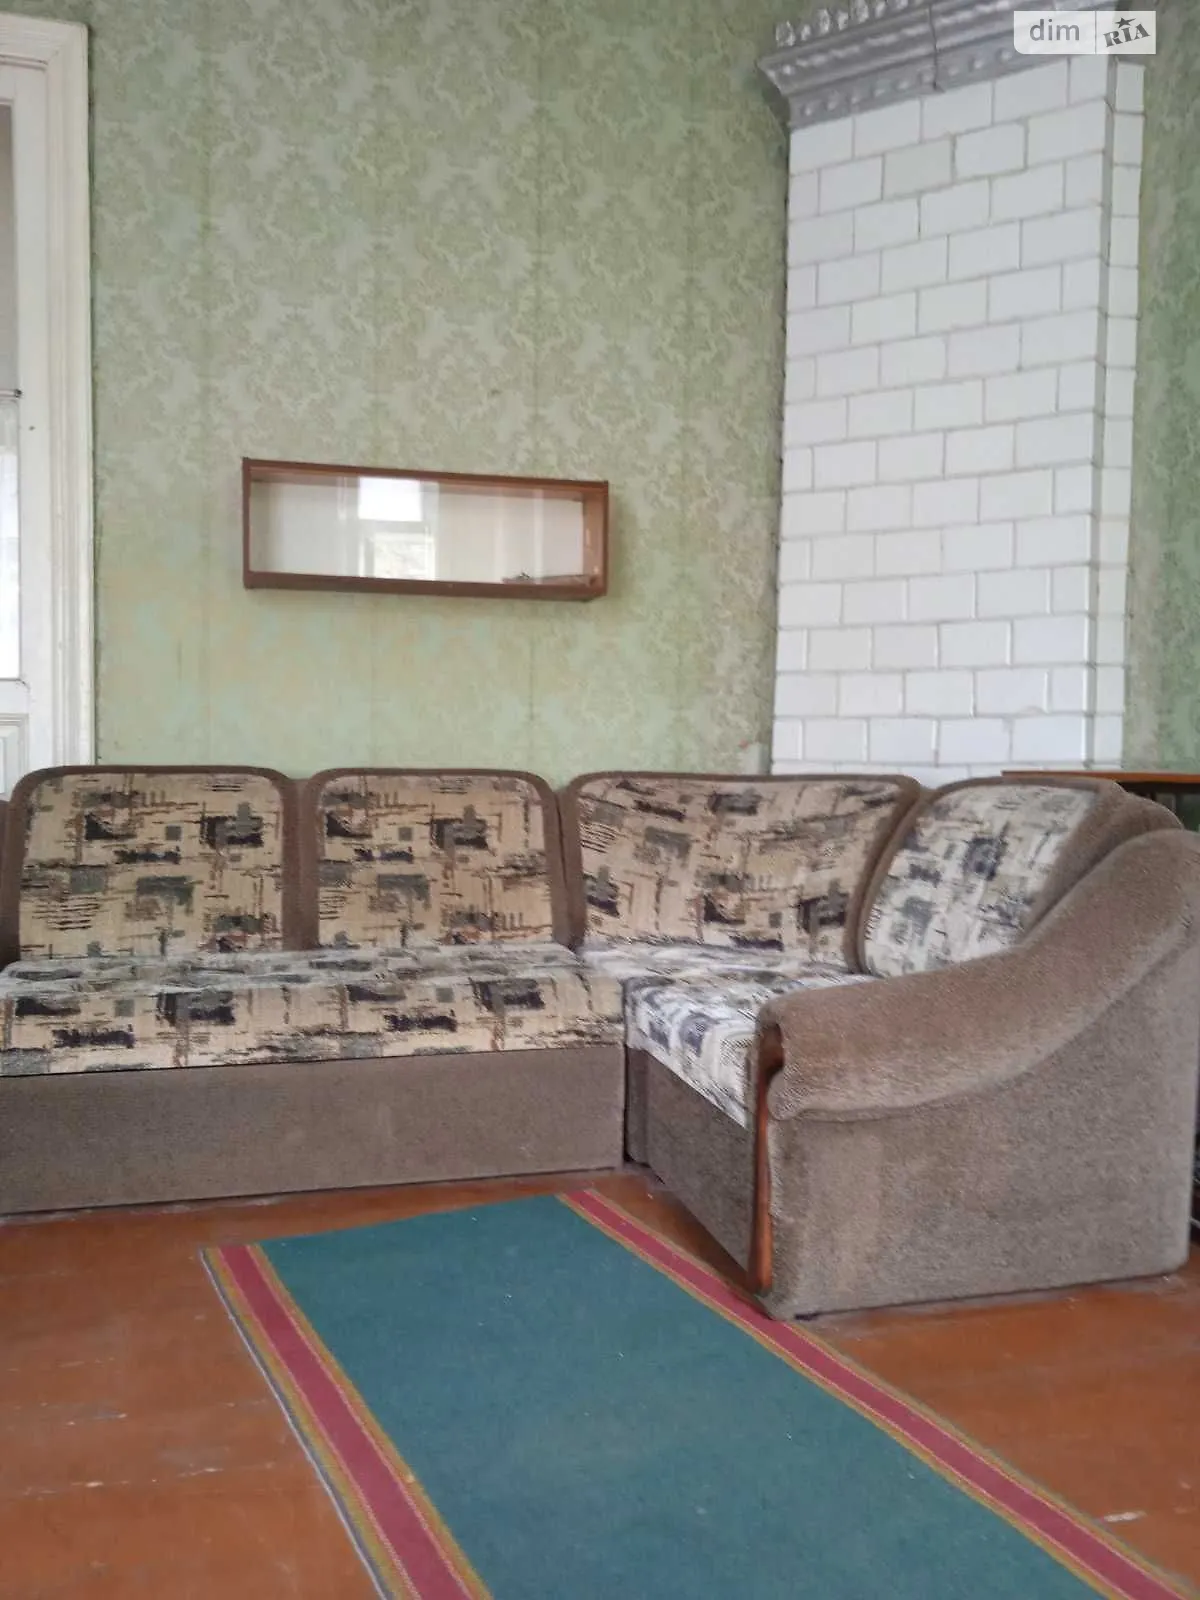 Продается комната 33 кв. м в Одессе, цена: 17000 $ - фото 1